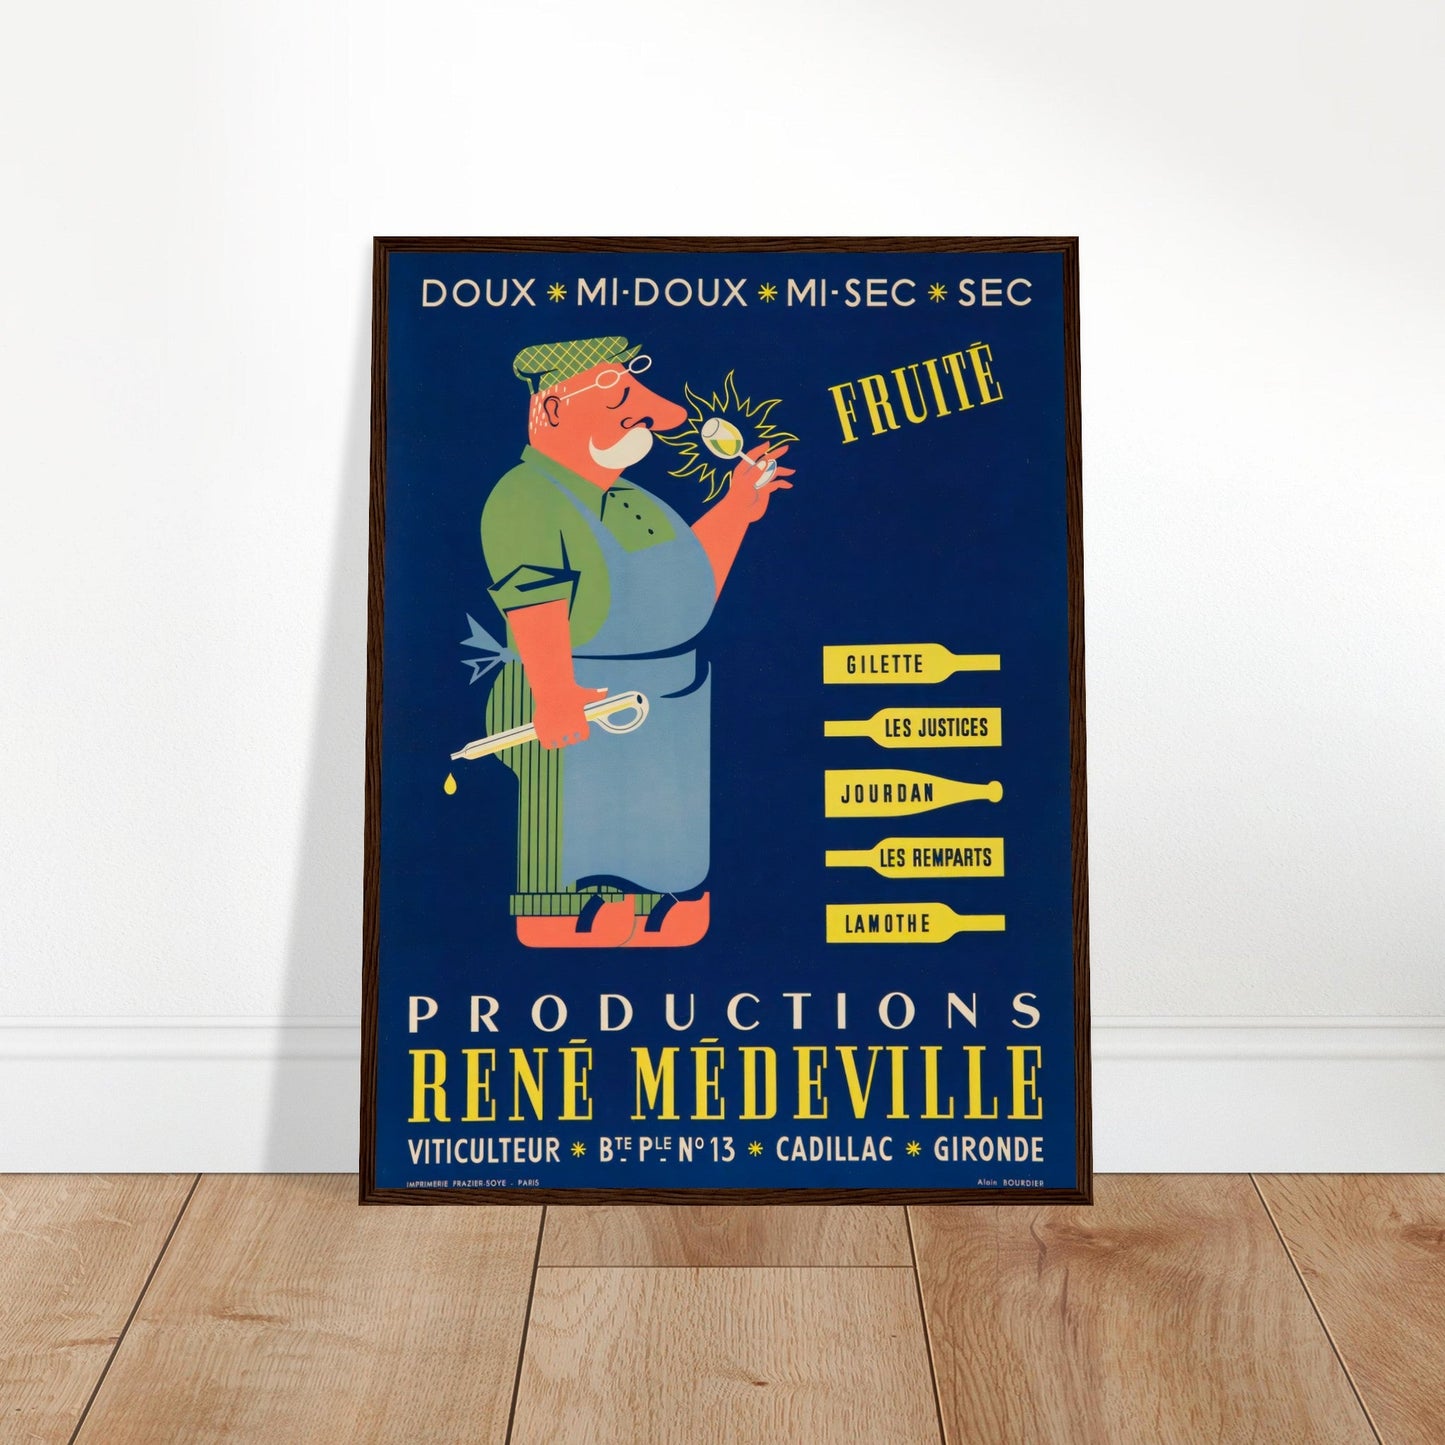 Rene Benneville Vintage Poster Reprint on Premium Matte Paper - Posterify